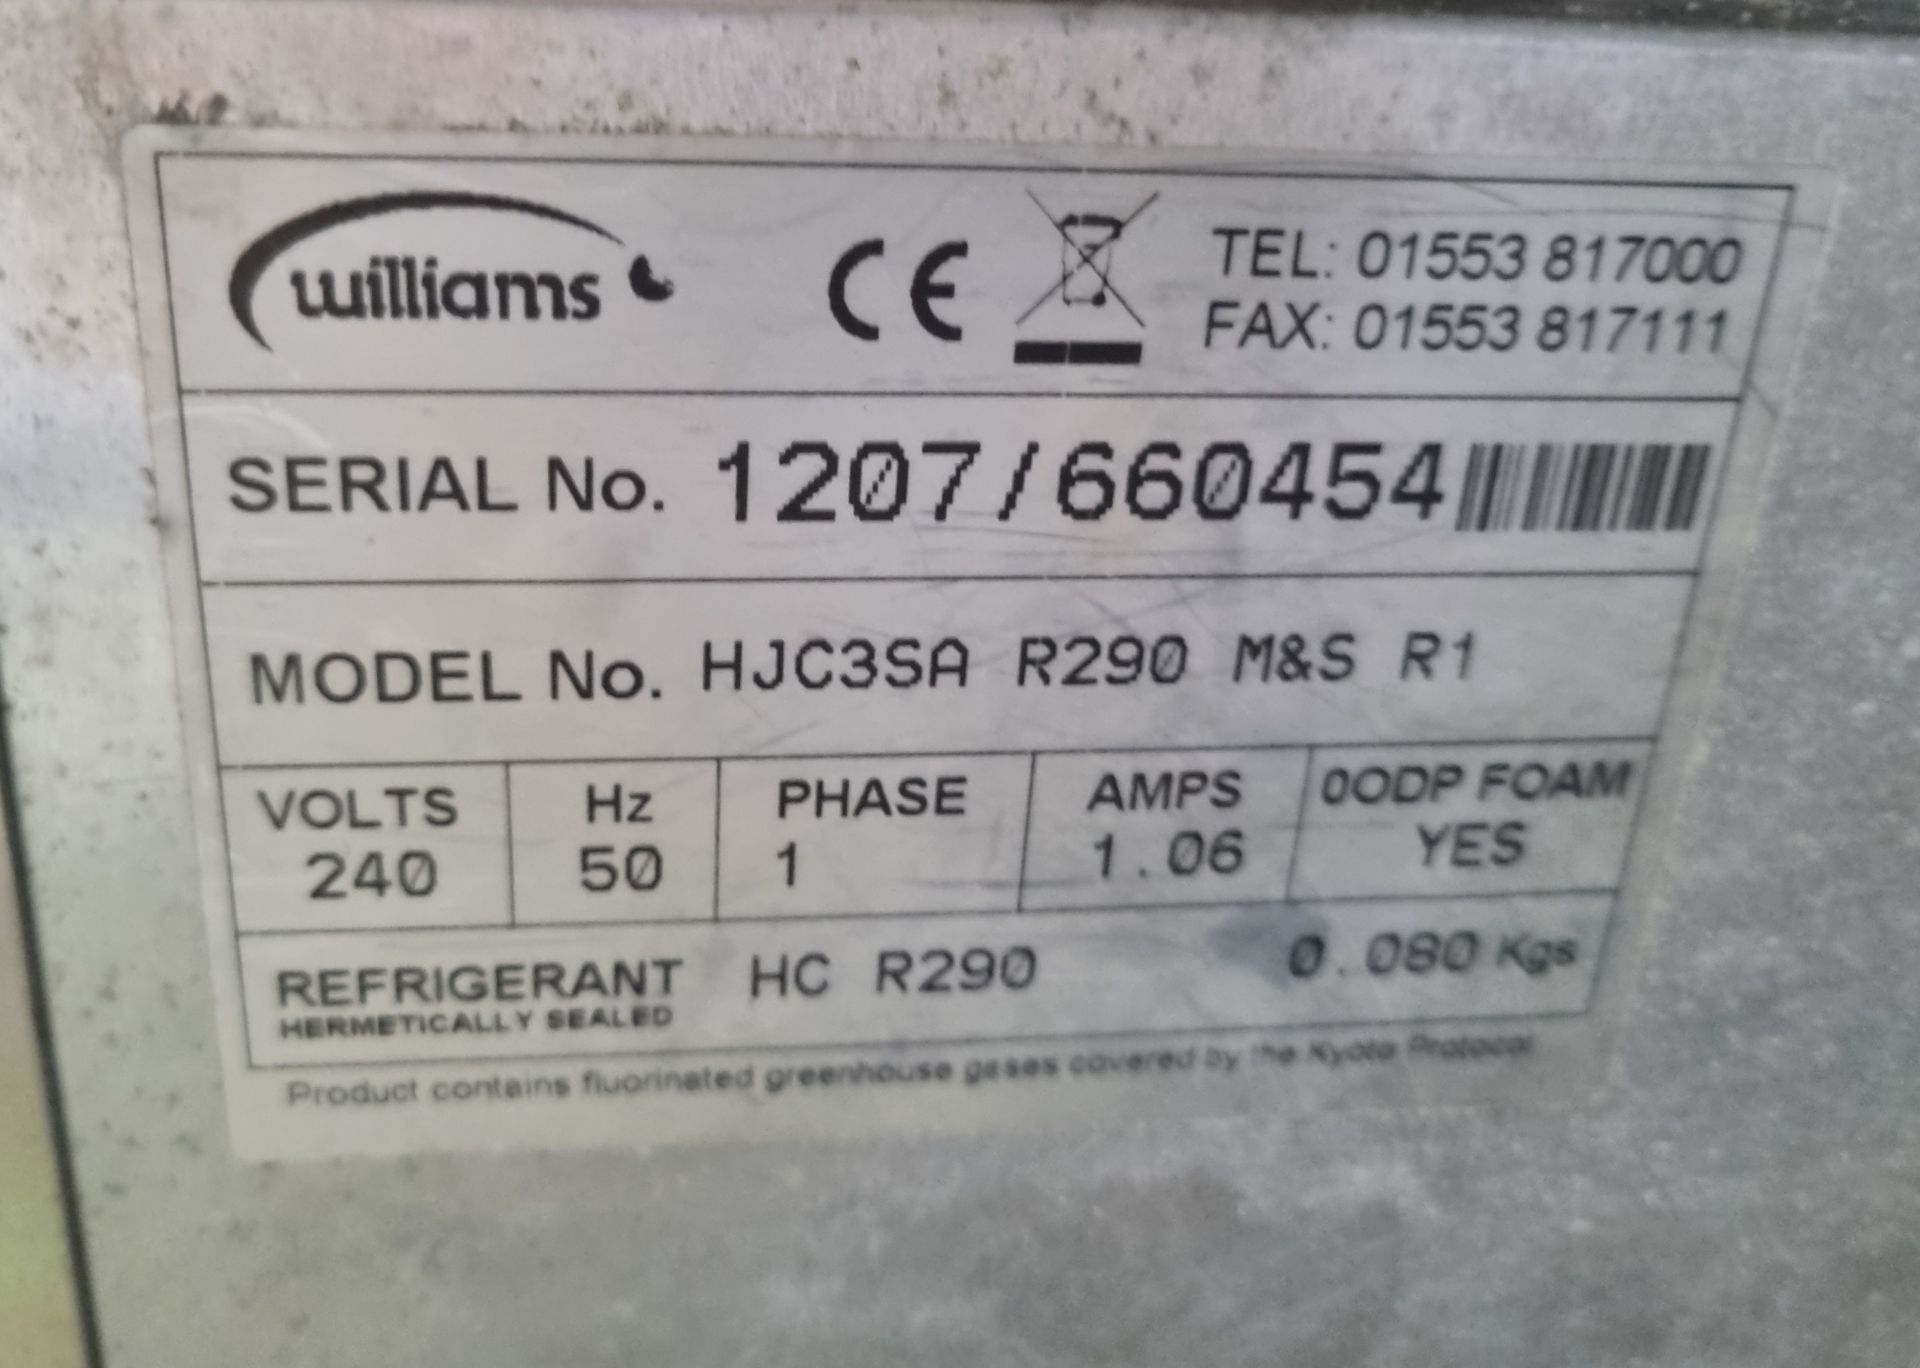 Williams HJC3-SA Jade st/st three door counter GN 1/1 refrigerator - L183xW66xH86cm - Image 5 of 6